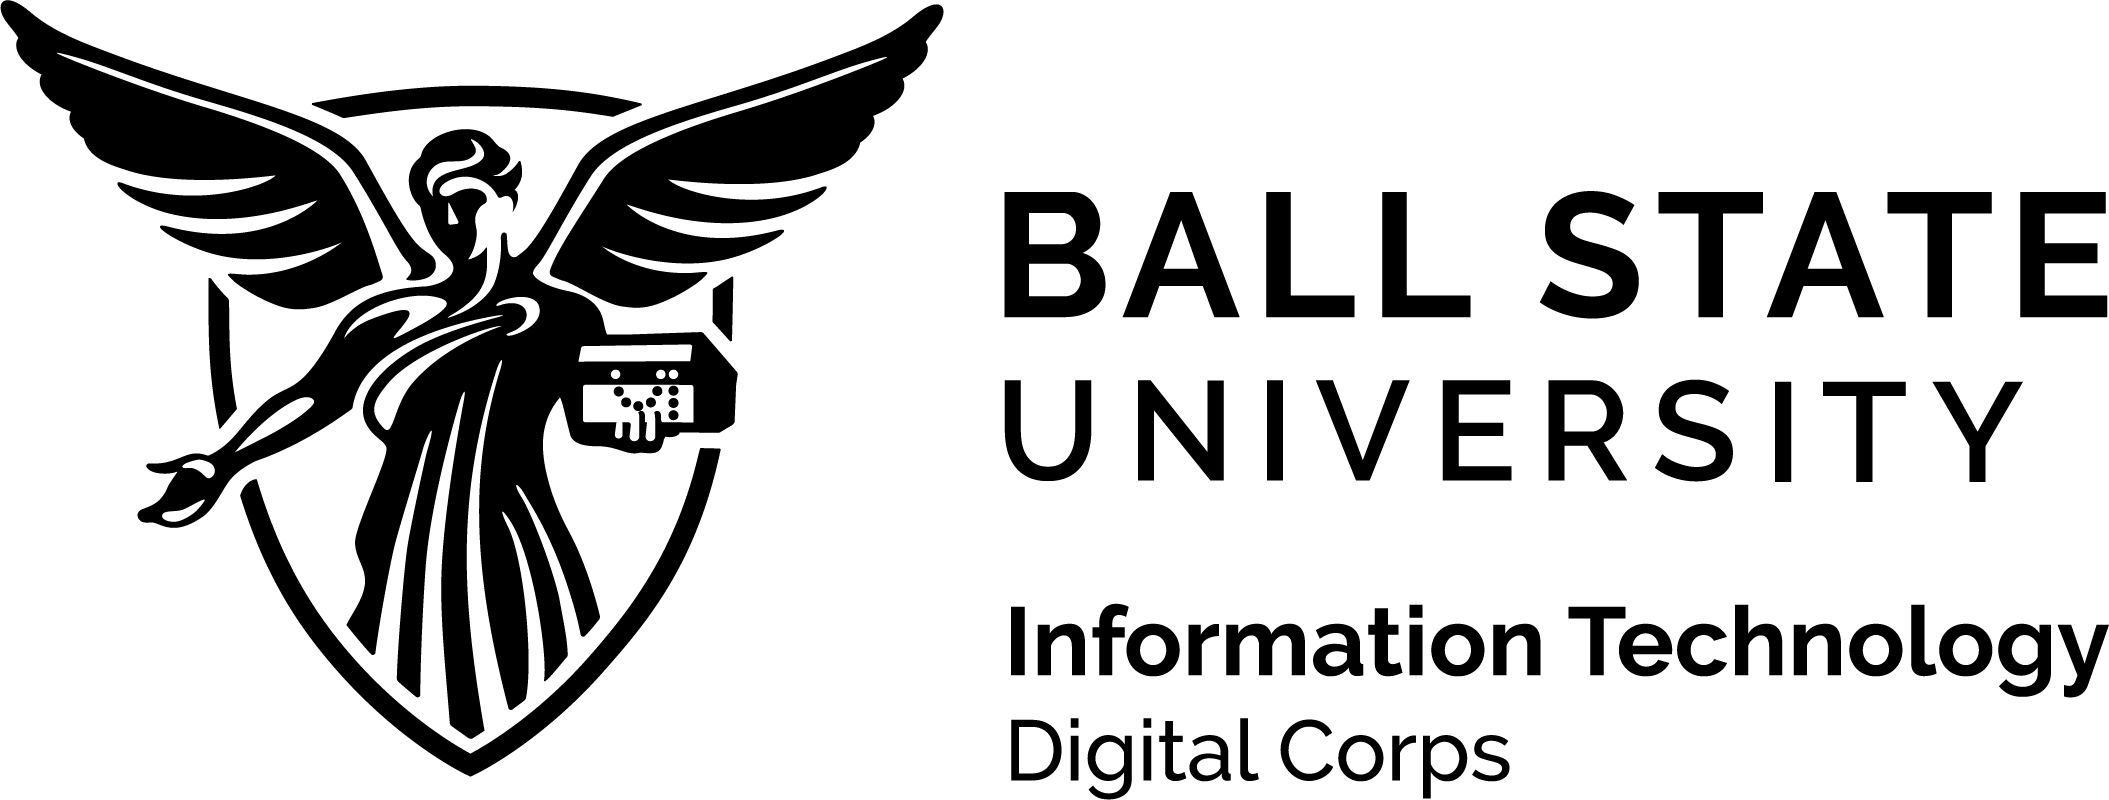 Ball State University Digital Corps